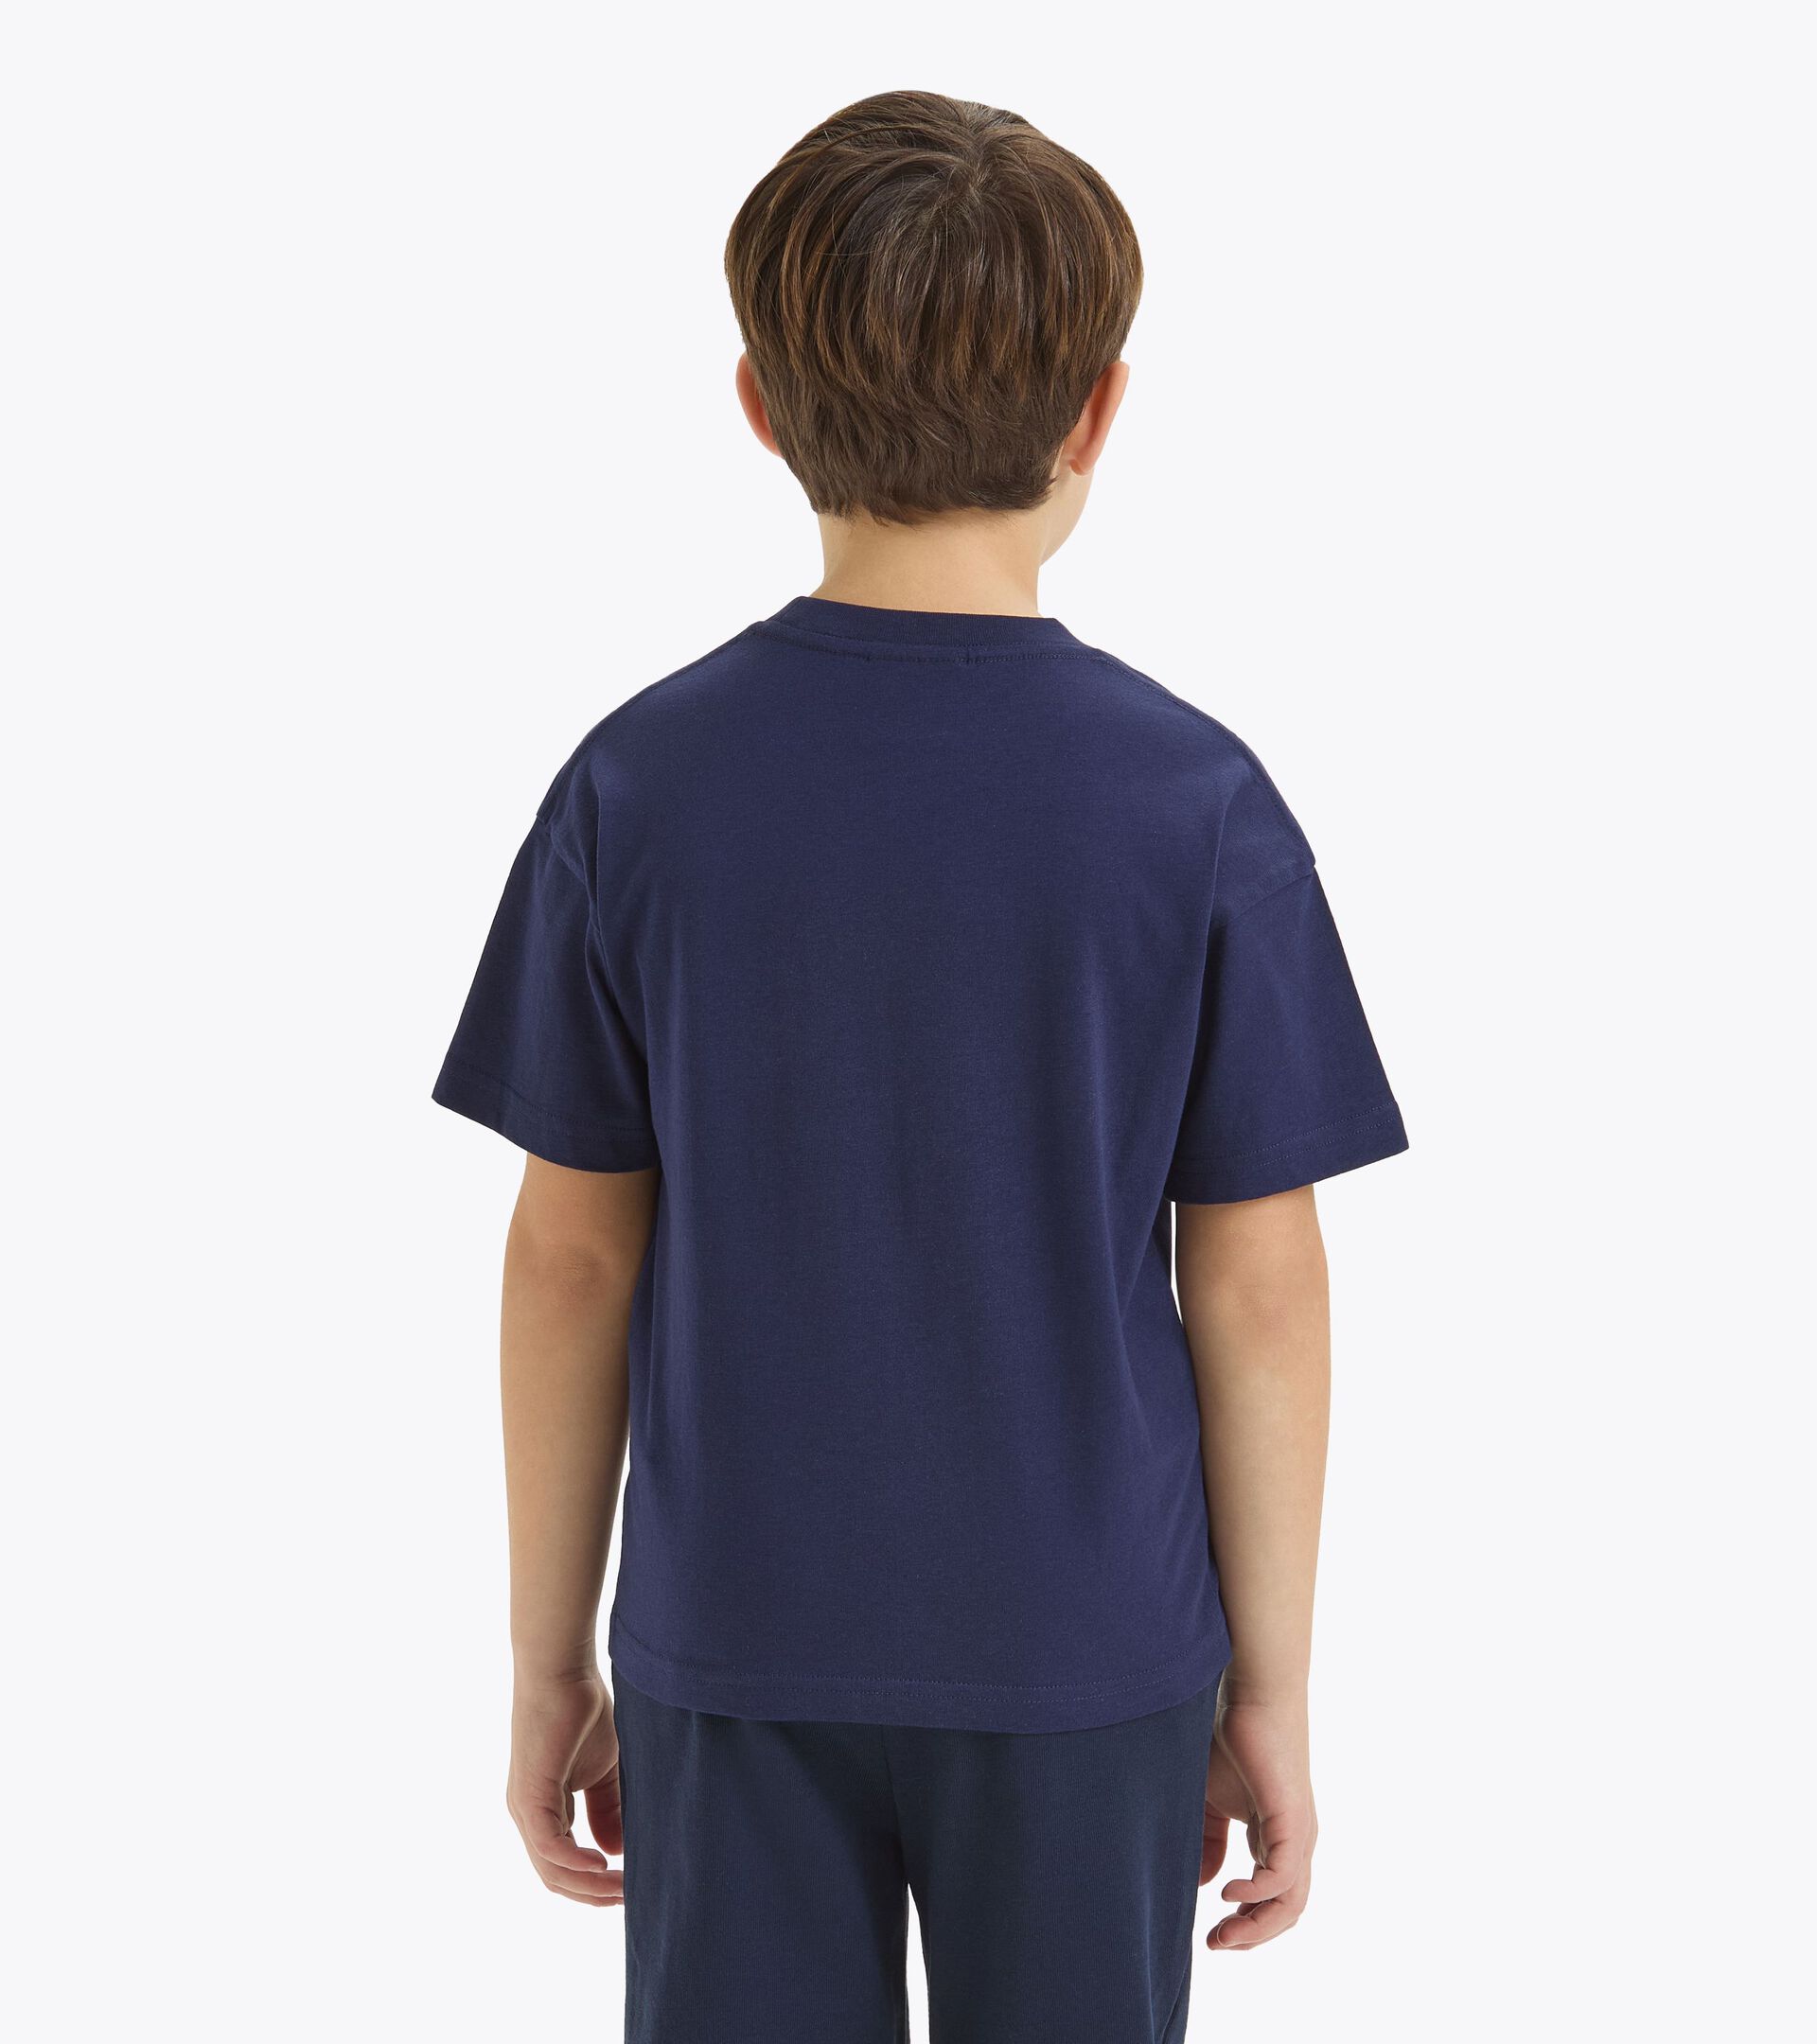 T-shirt de sport - Enfants
 JU.T-SHIRT SS BL BLEU CABAN - Diadora